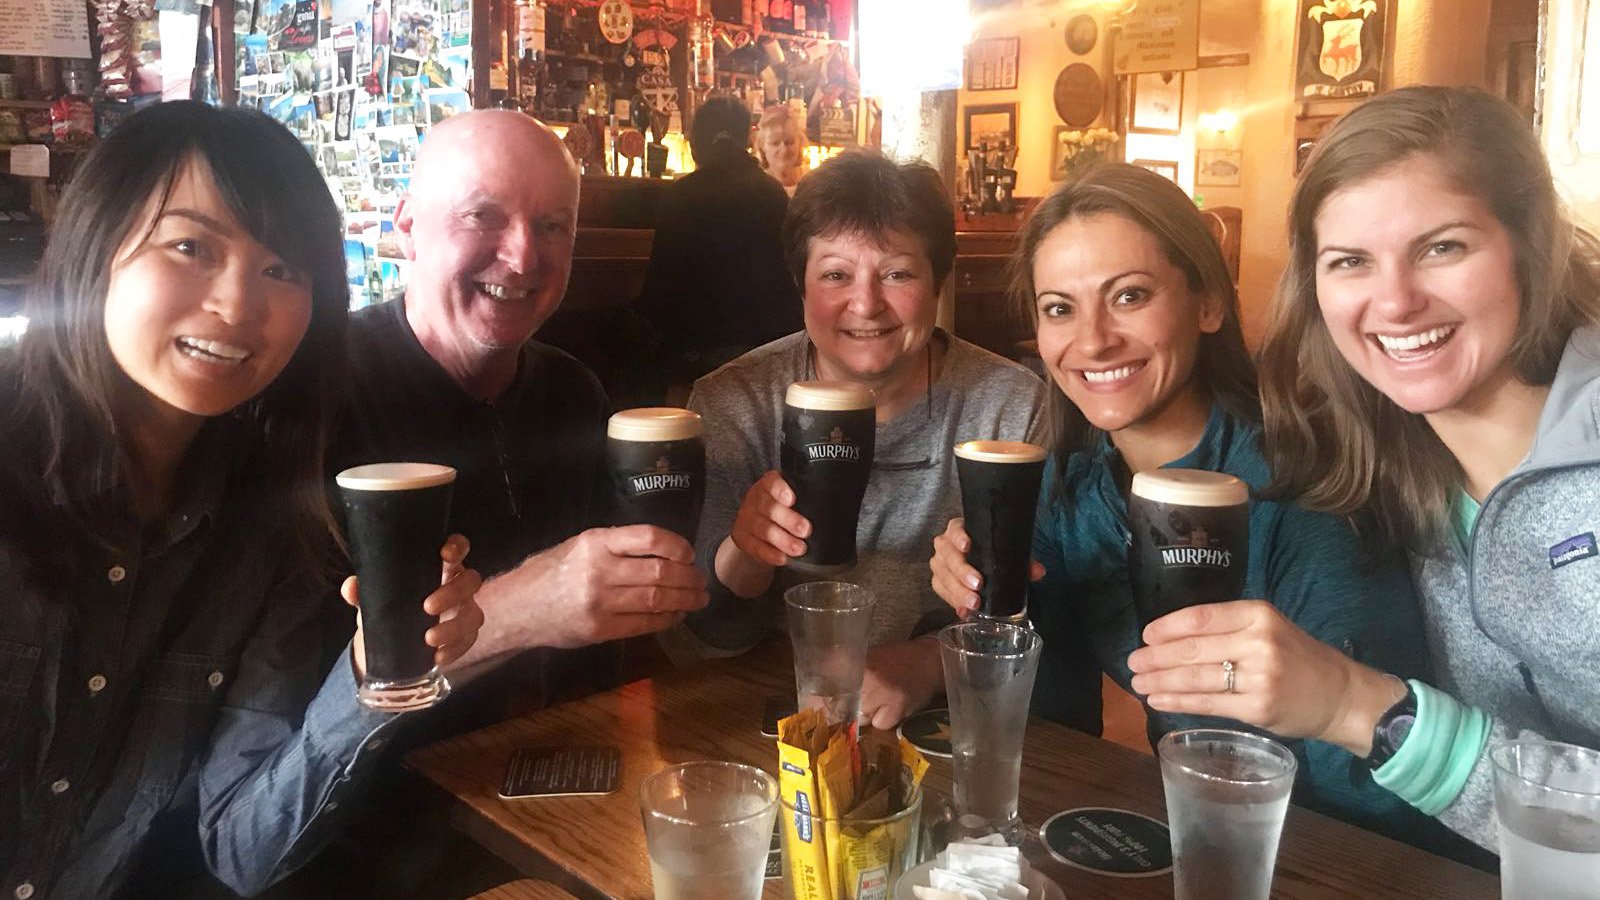 Enjoiying pints in a cosy Irish pub